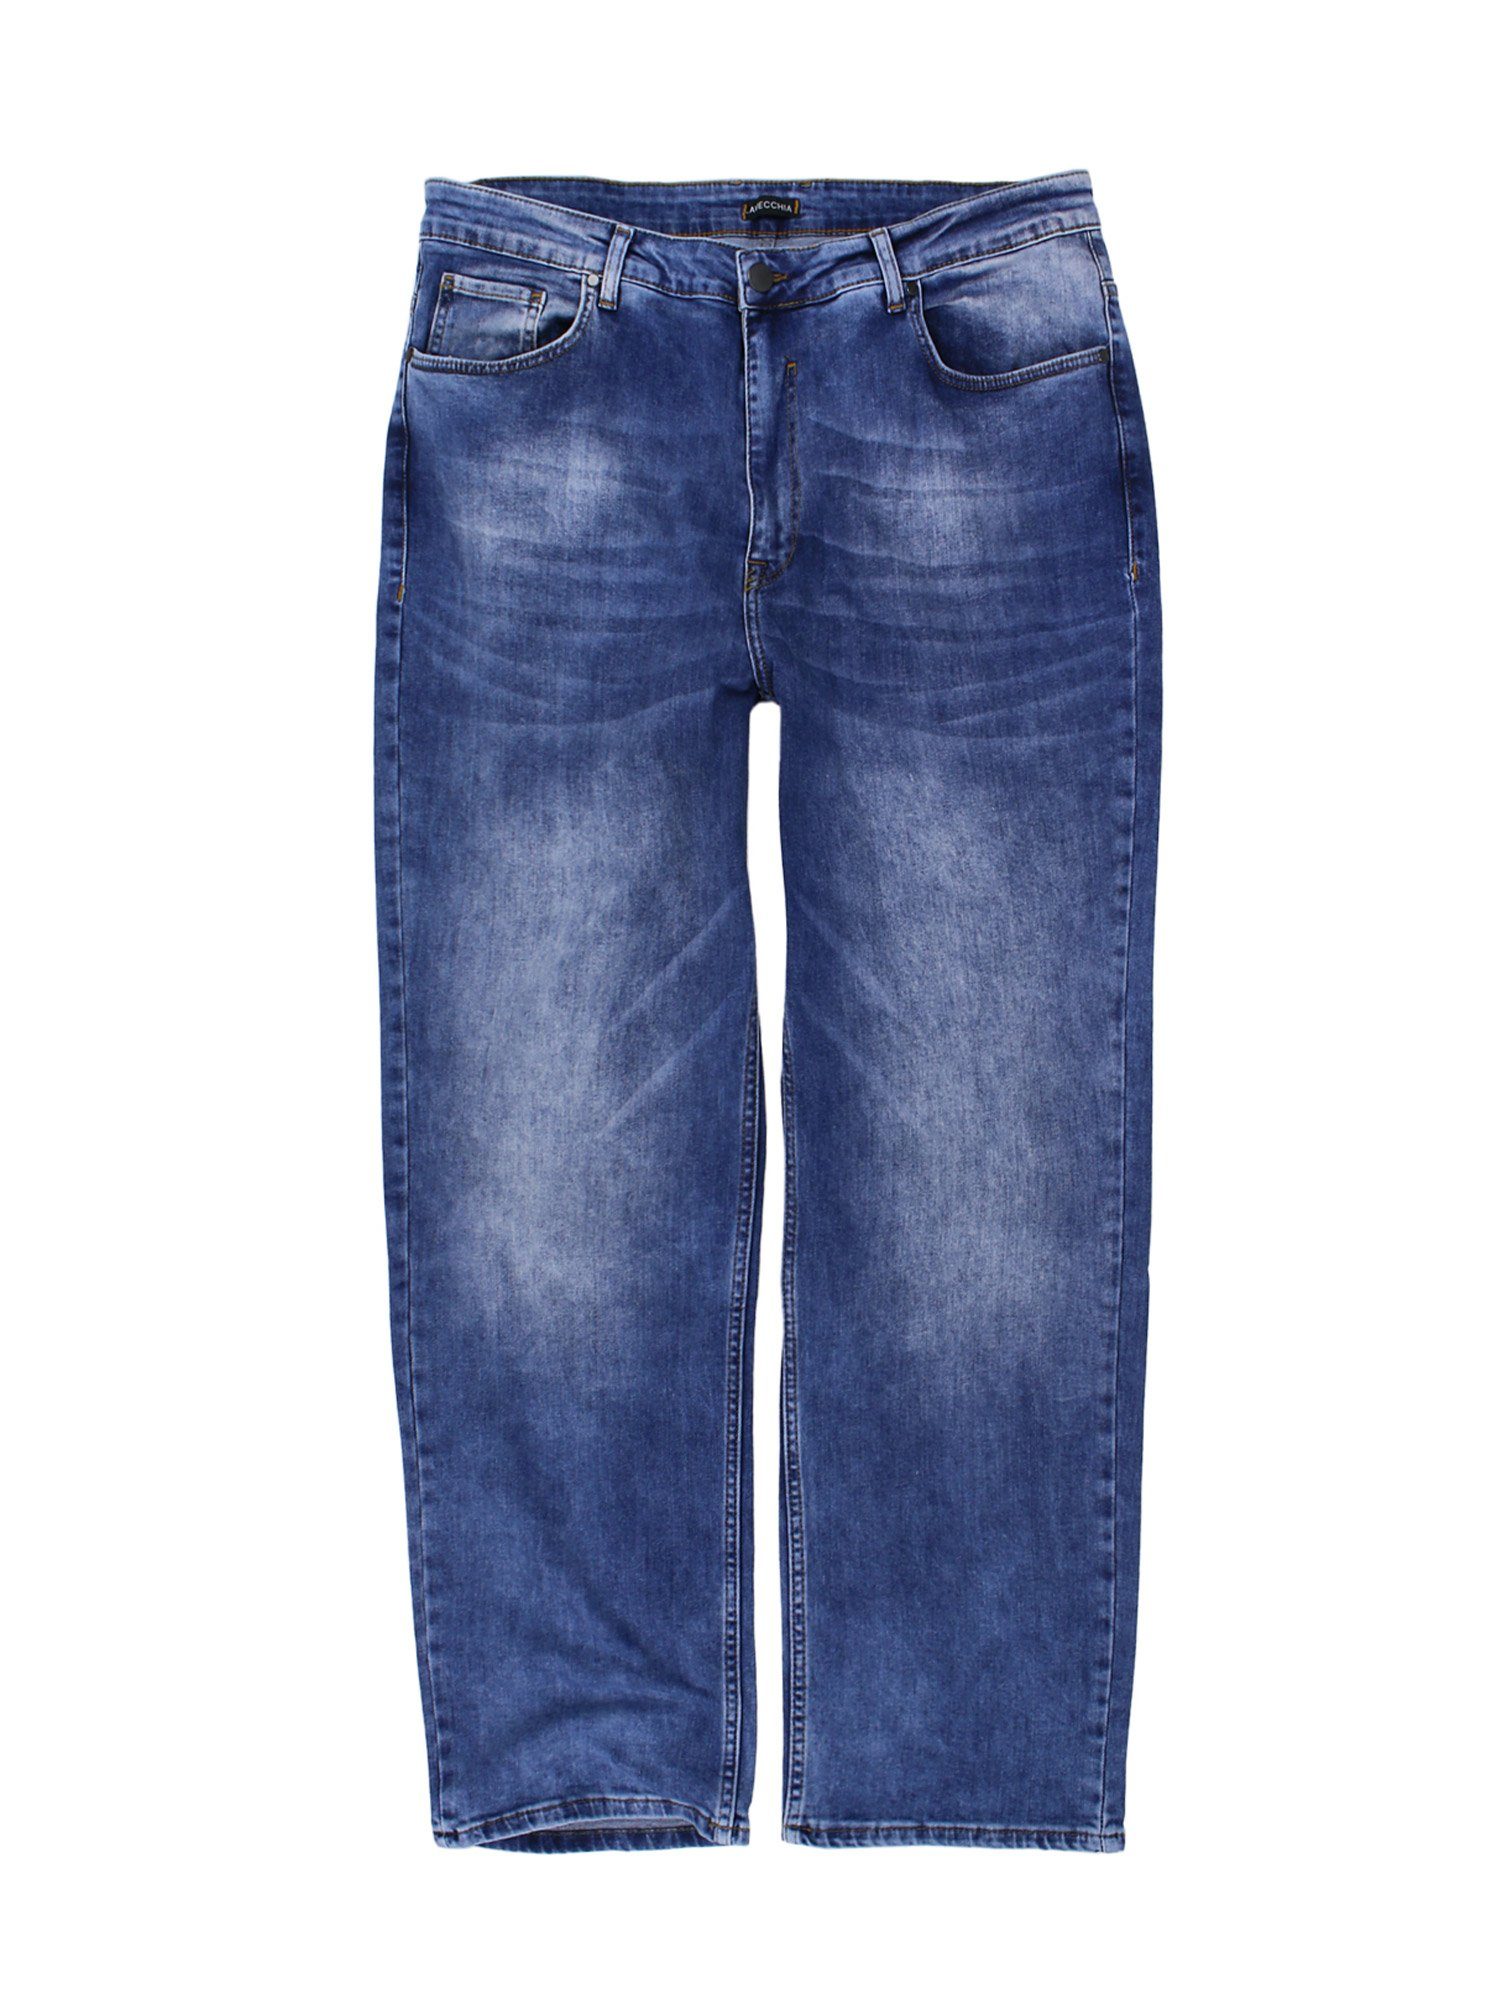 Lavecchia Comfort-fit-Jeans Jeanshose Übergrößen mit stoneblau LV-501 Stretch Herren Elasthan